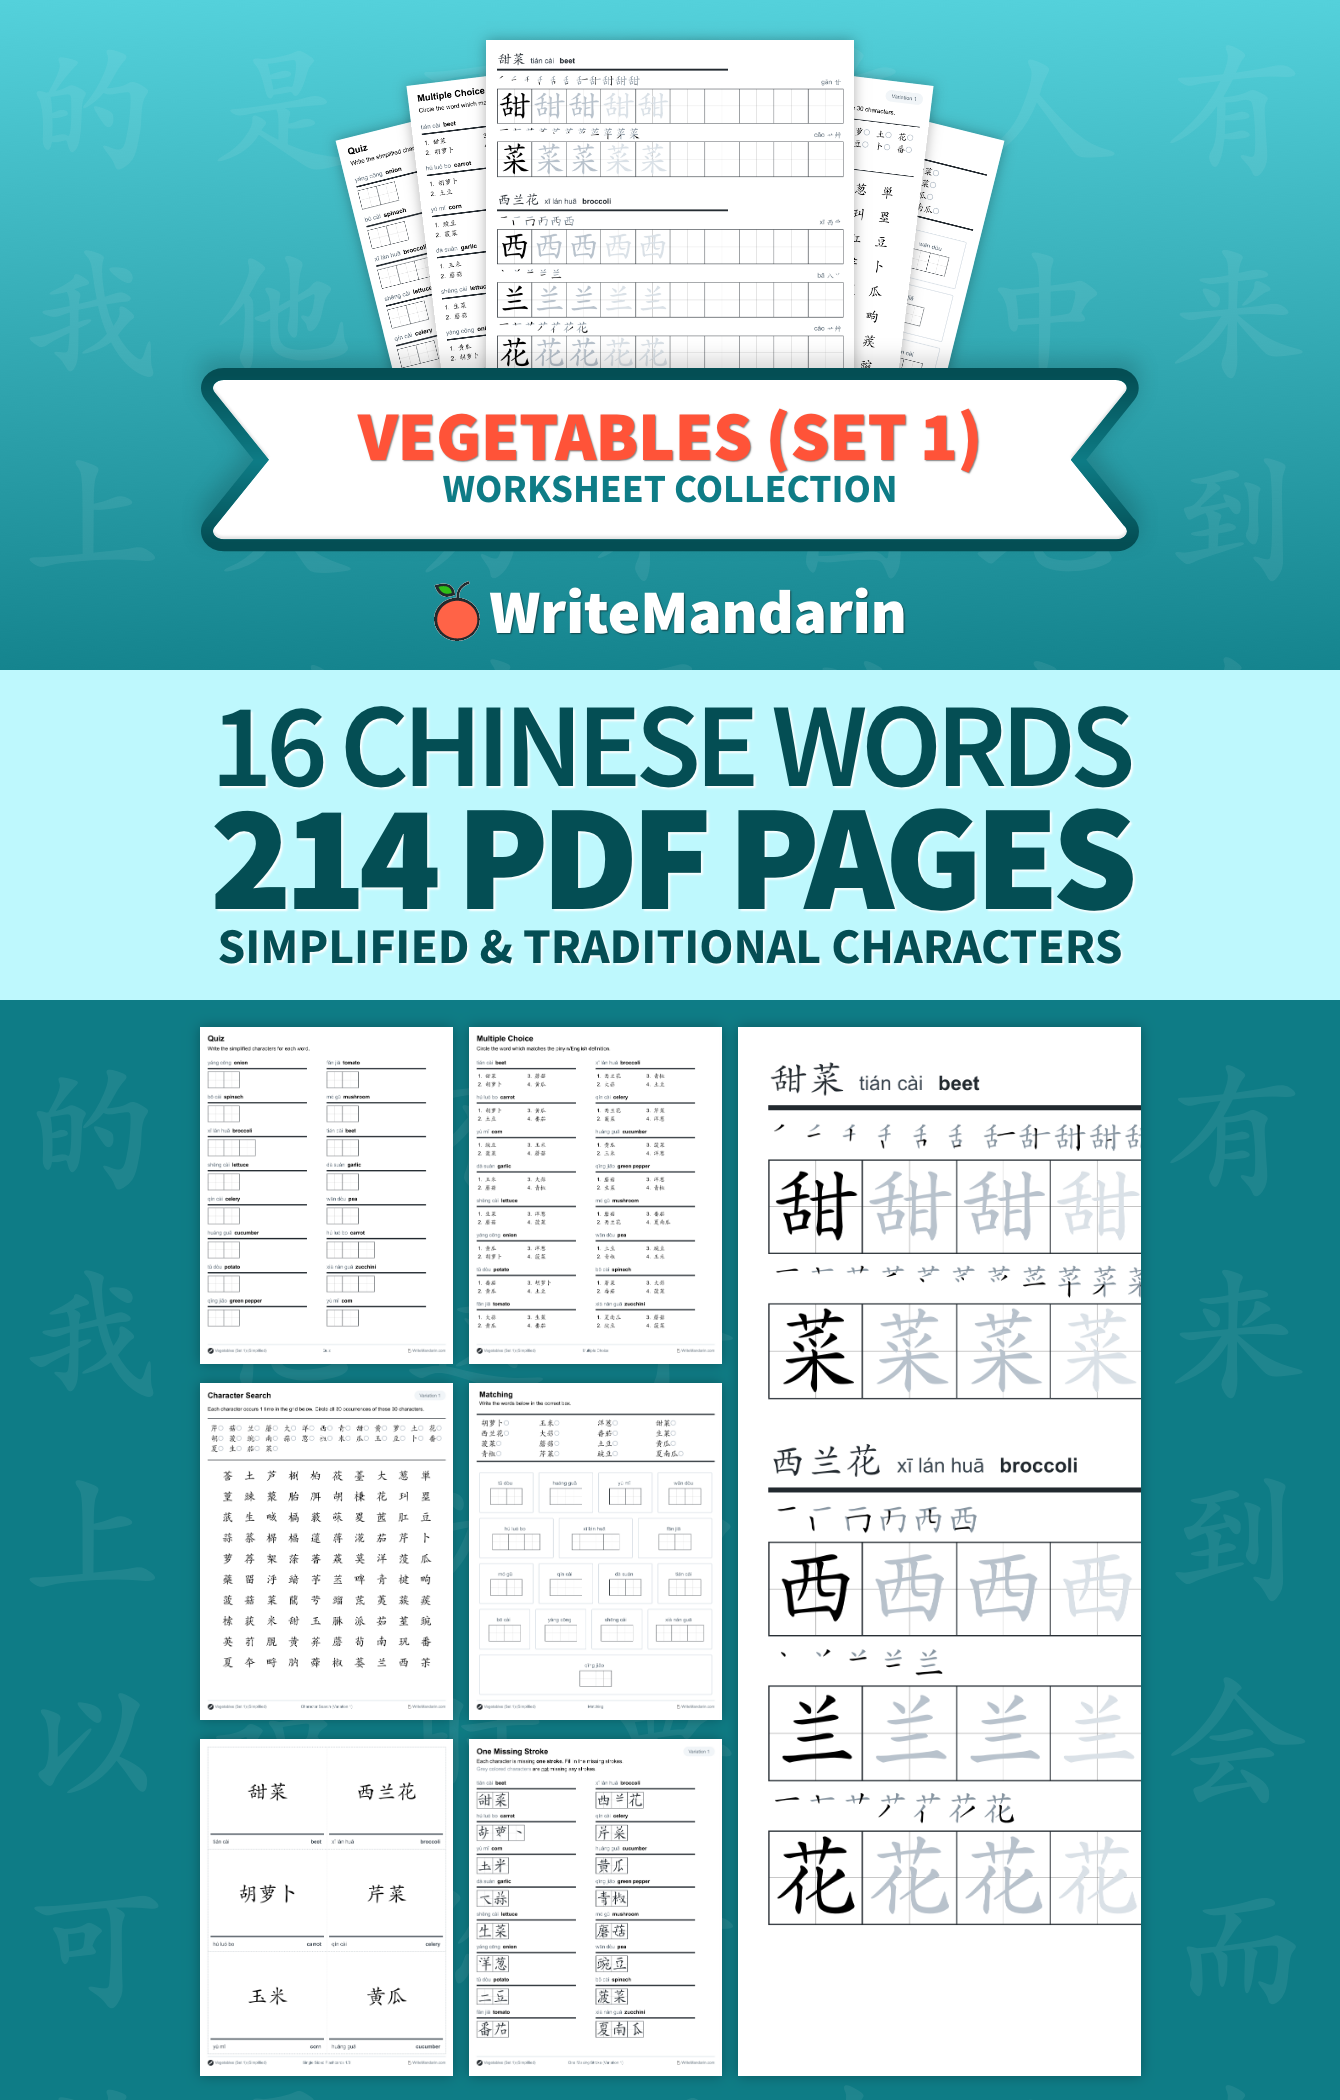 Preview image of Vegetables (Set 1) worksheet collection